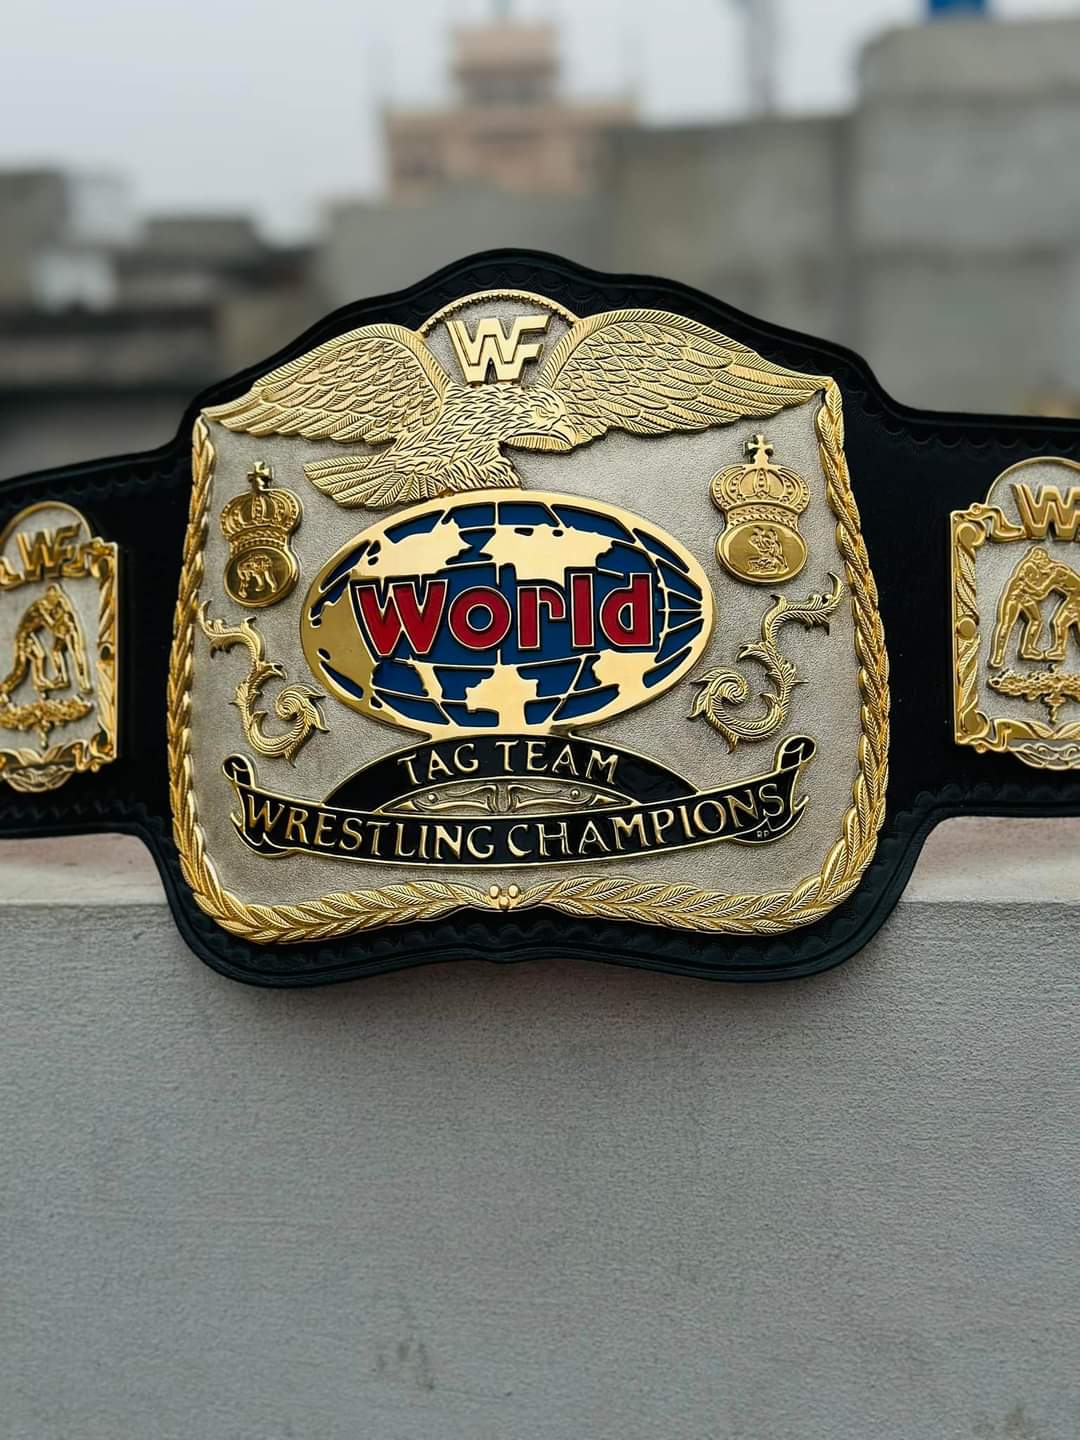 WWF Classic World Tag Team Championship Replica Title Belt